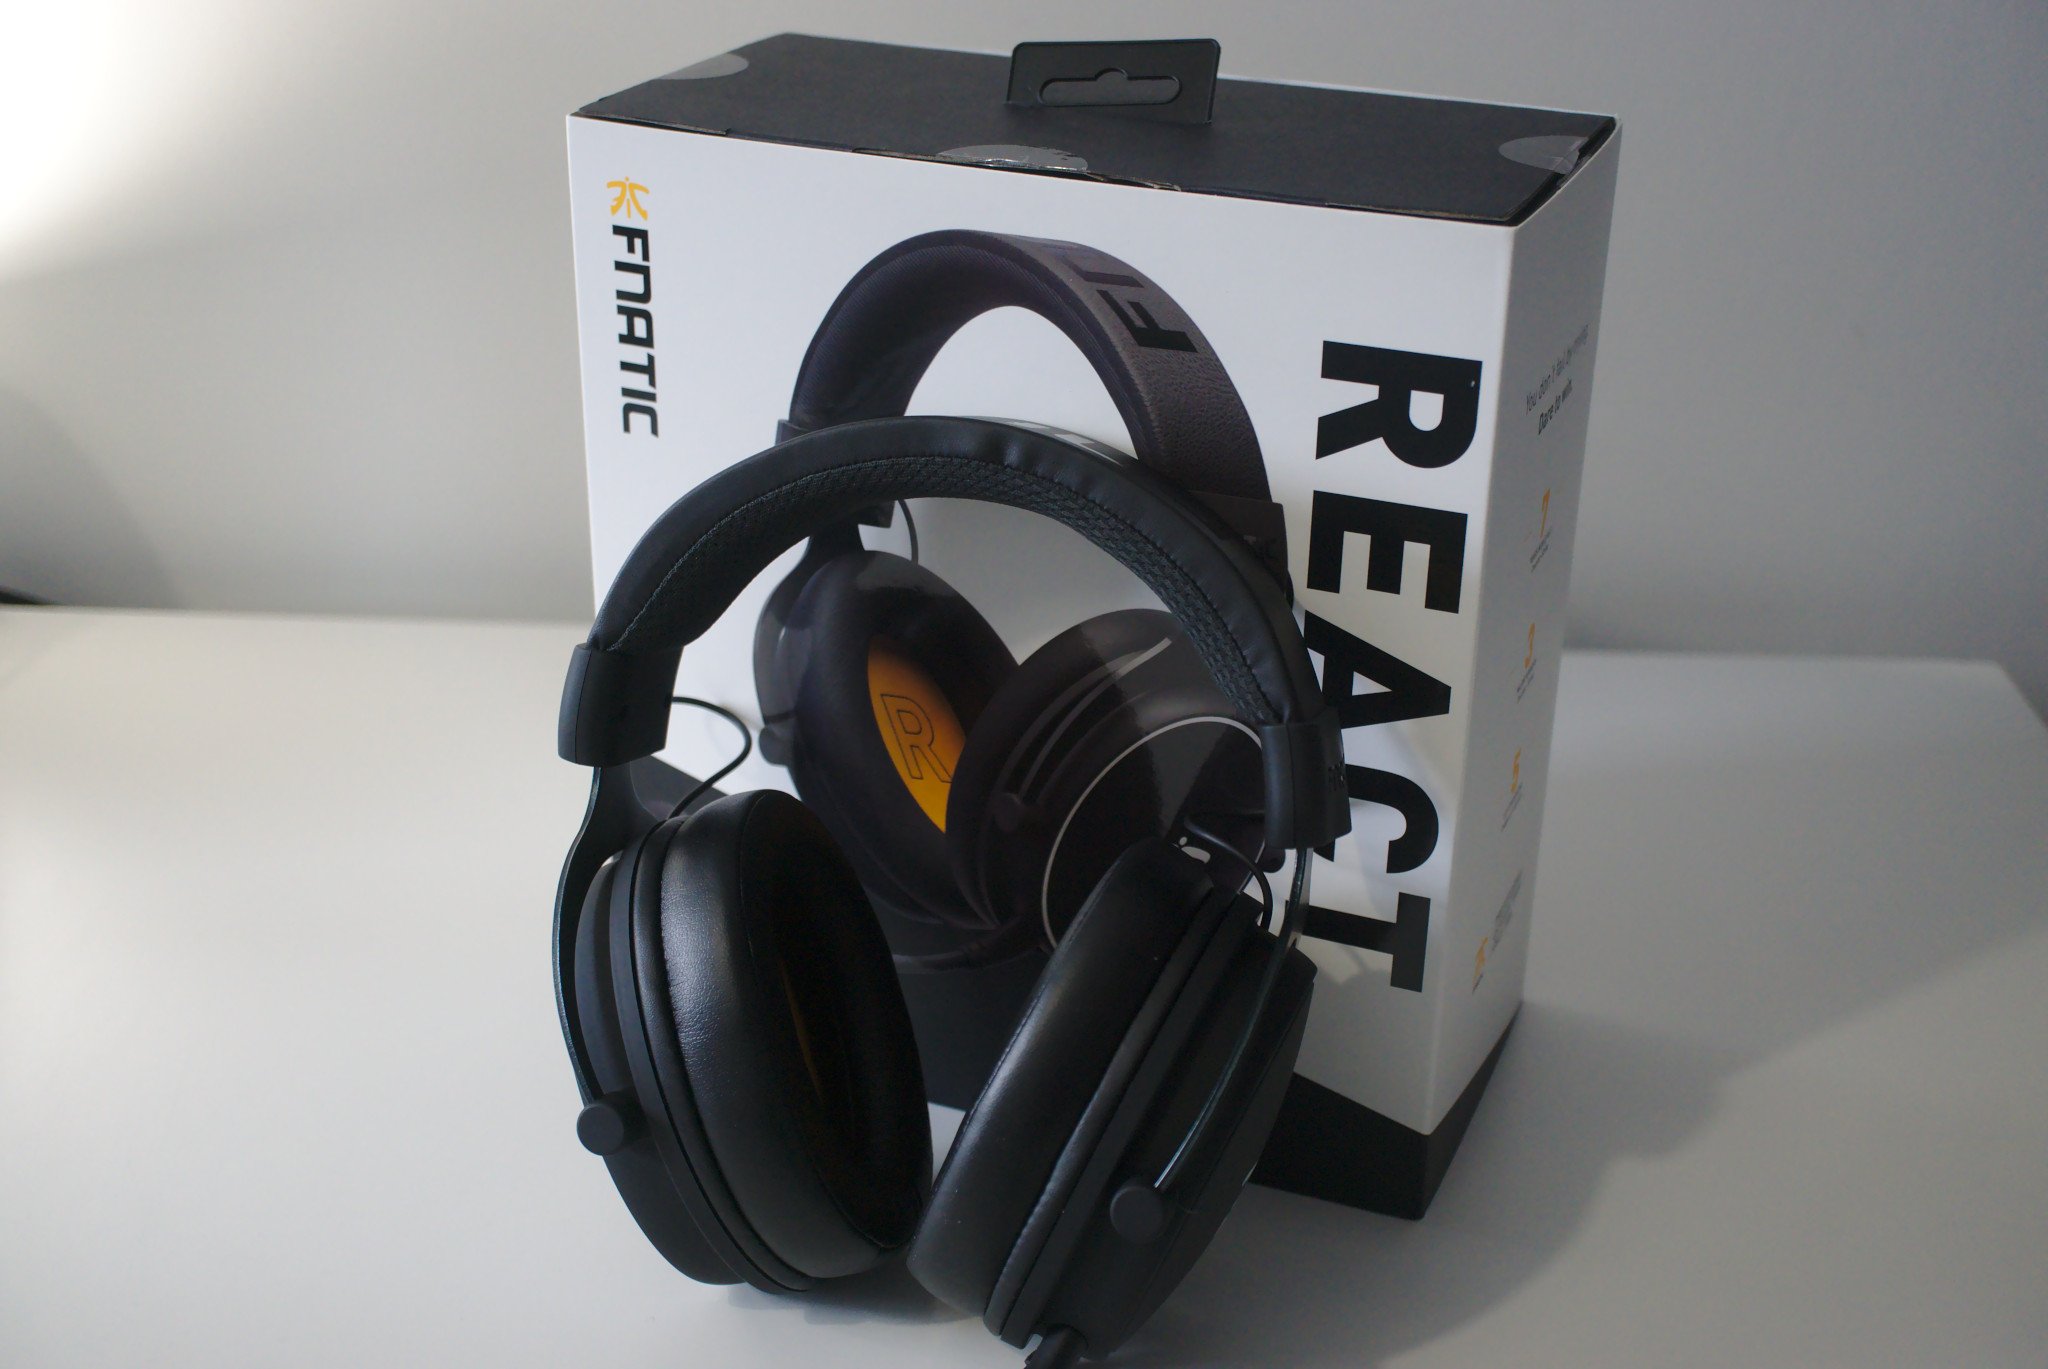 fnatic-react-headset-box.jpg